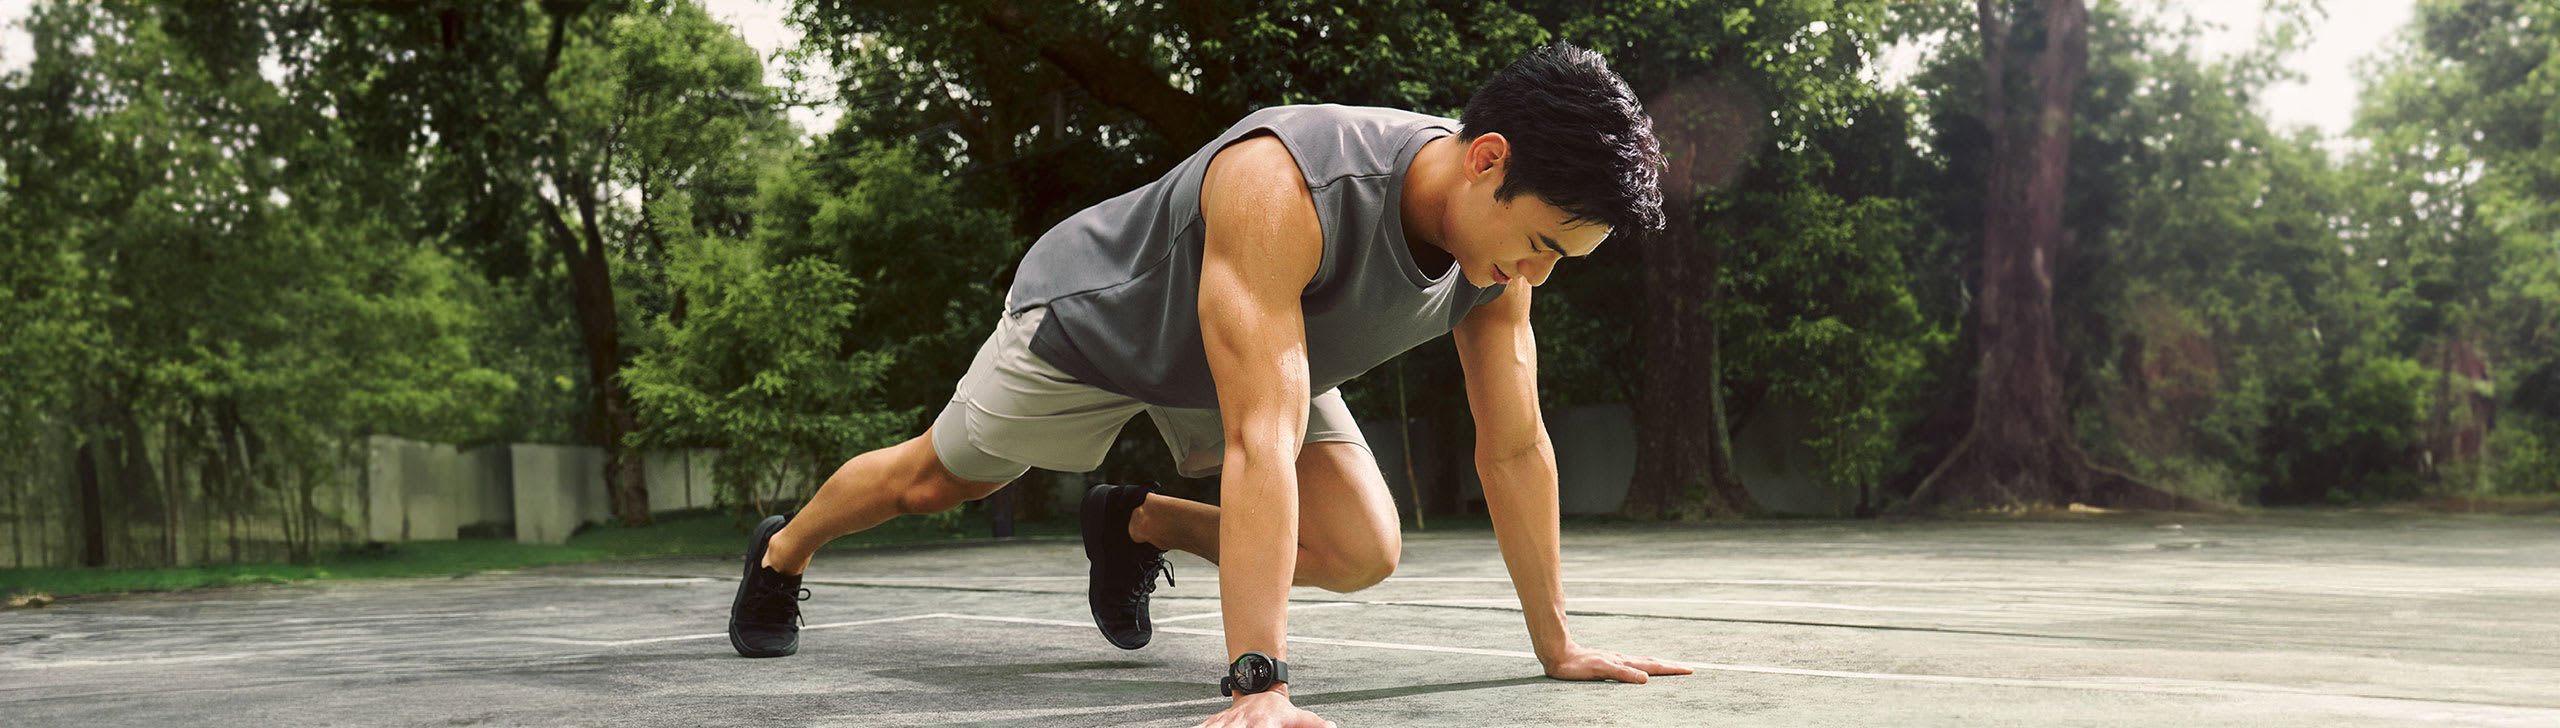 Fitness Tracker | Wearables | Garmin Philippines